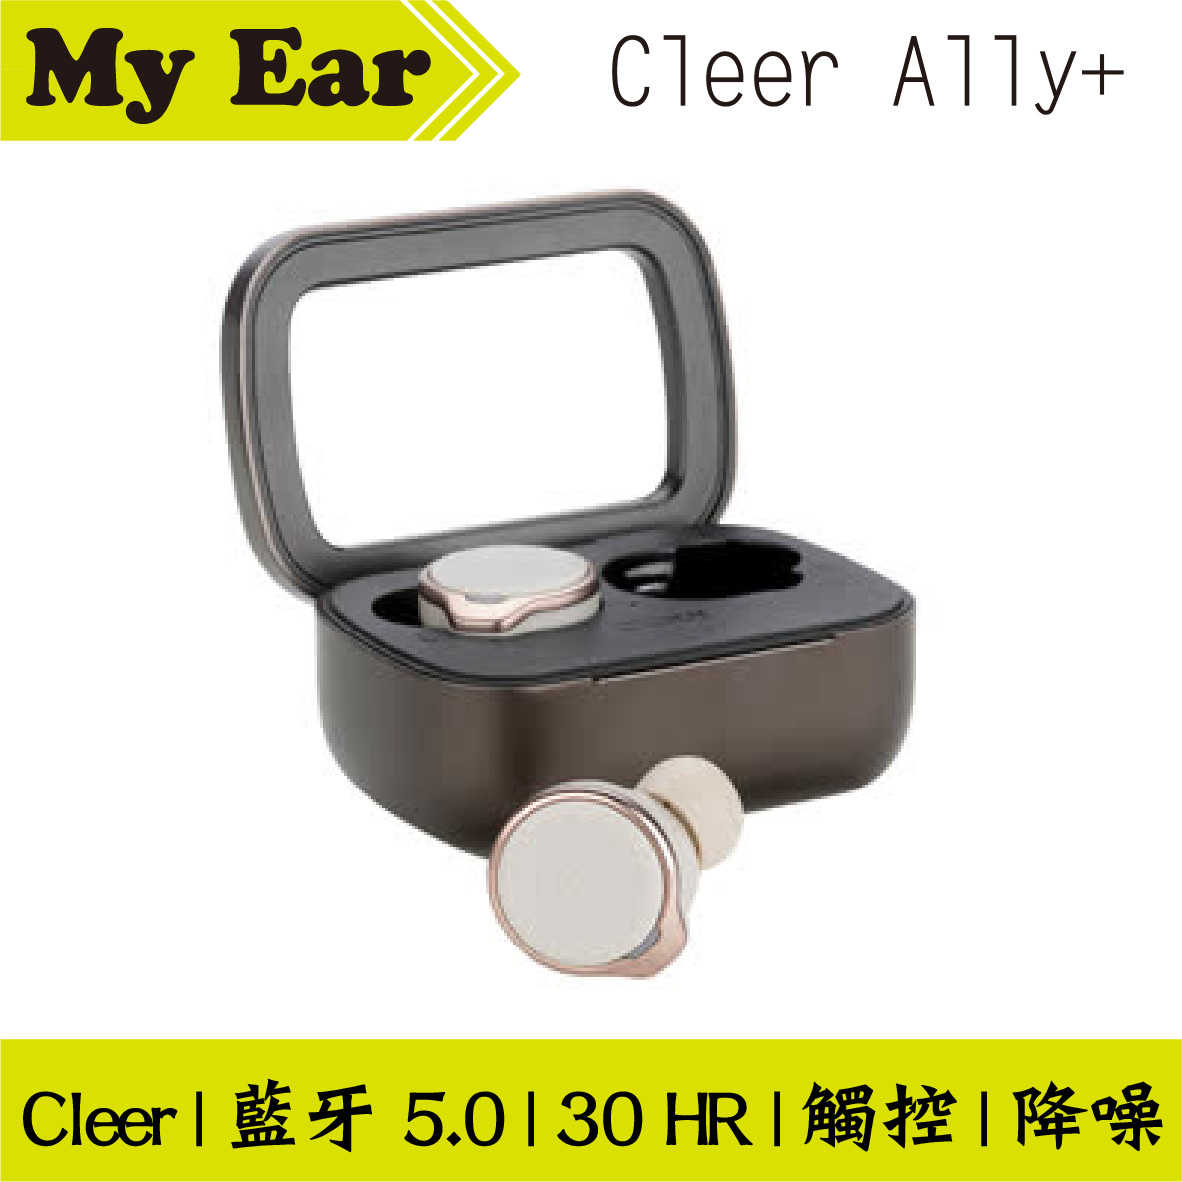 Cleer Ally+ 暖沙色 真無線 快充 降噪 麥克風 立體聲 藍芽 耳機 | My Ear 耳機專門店